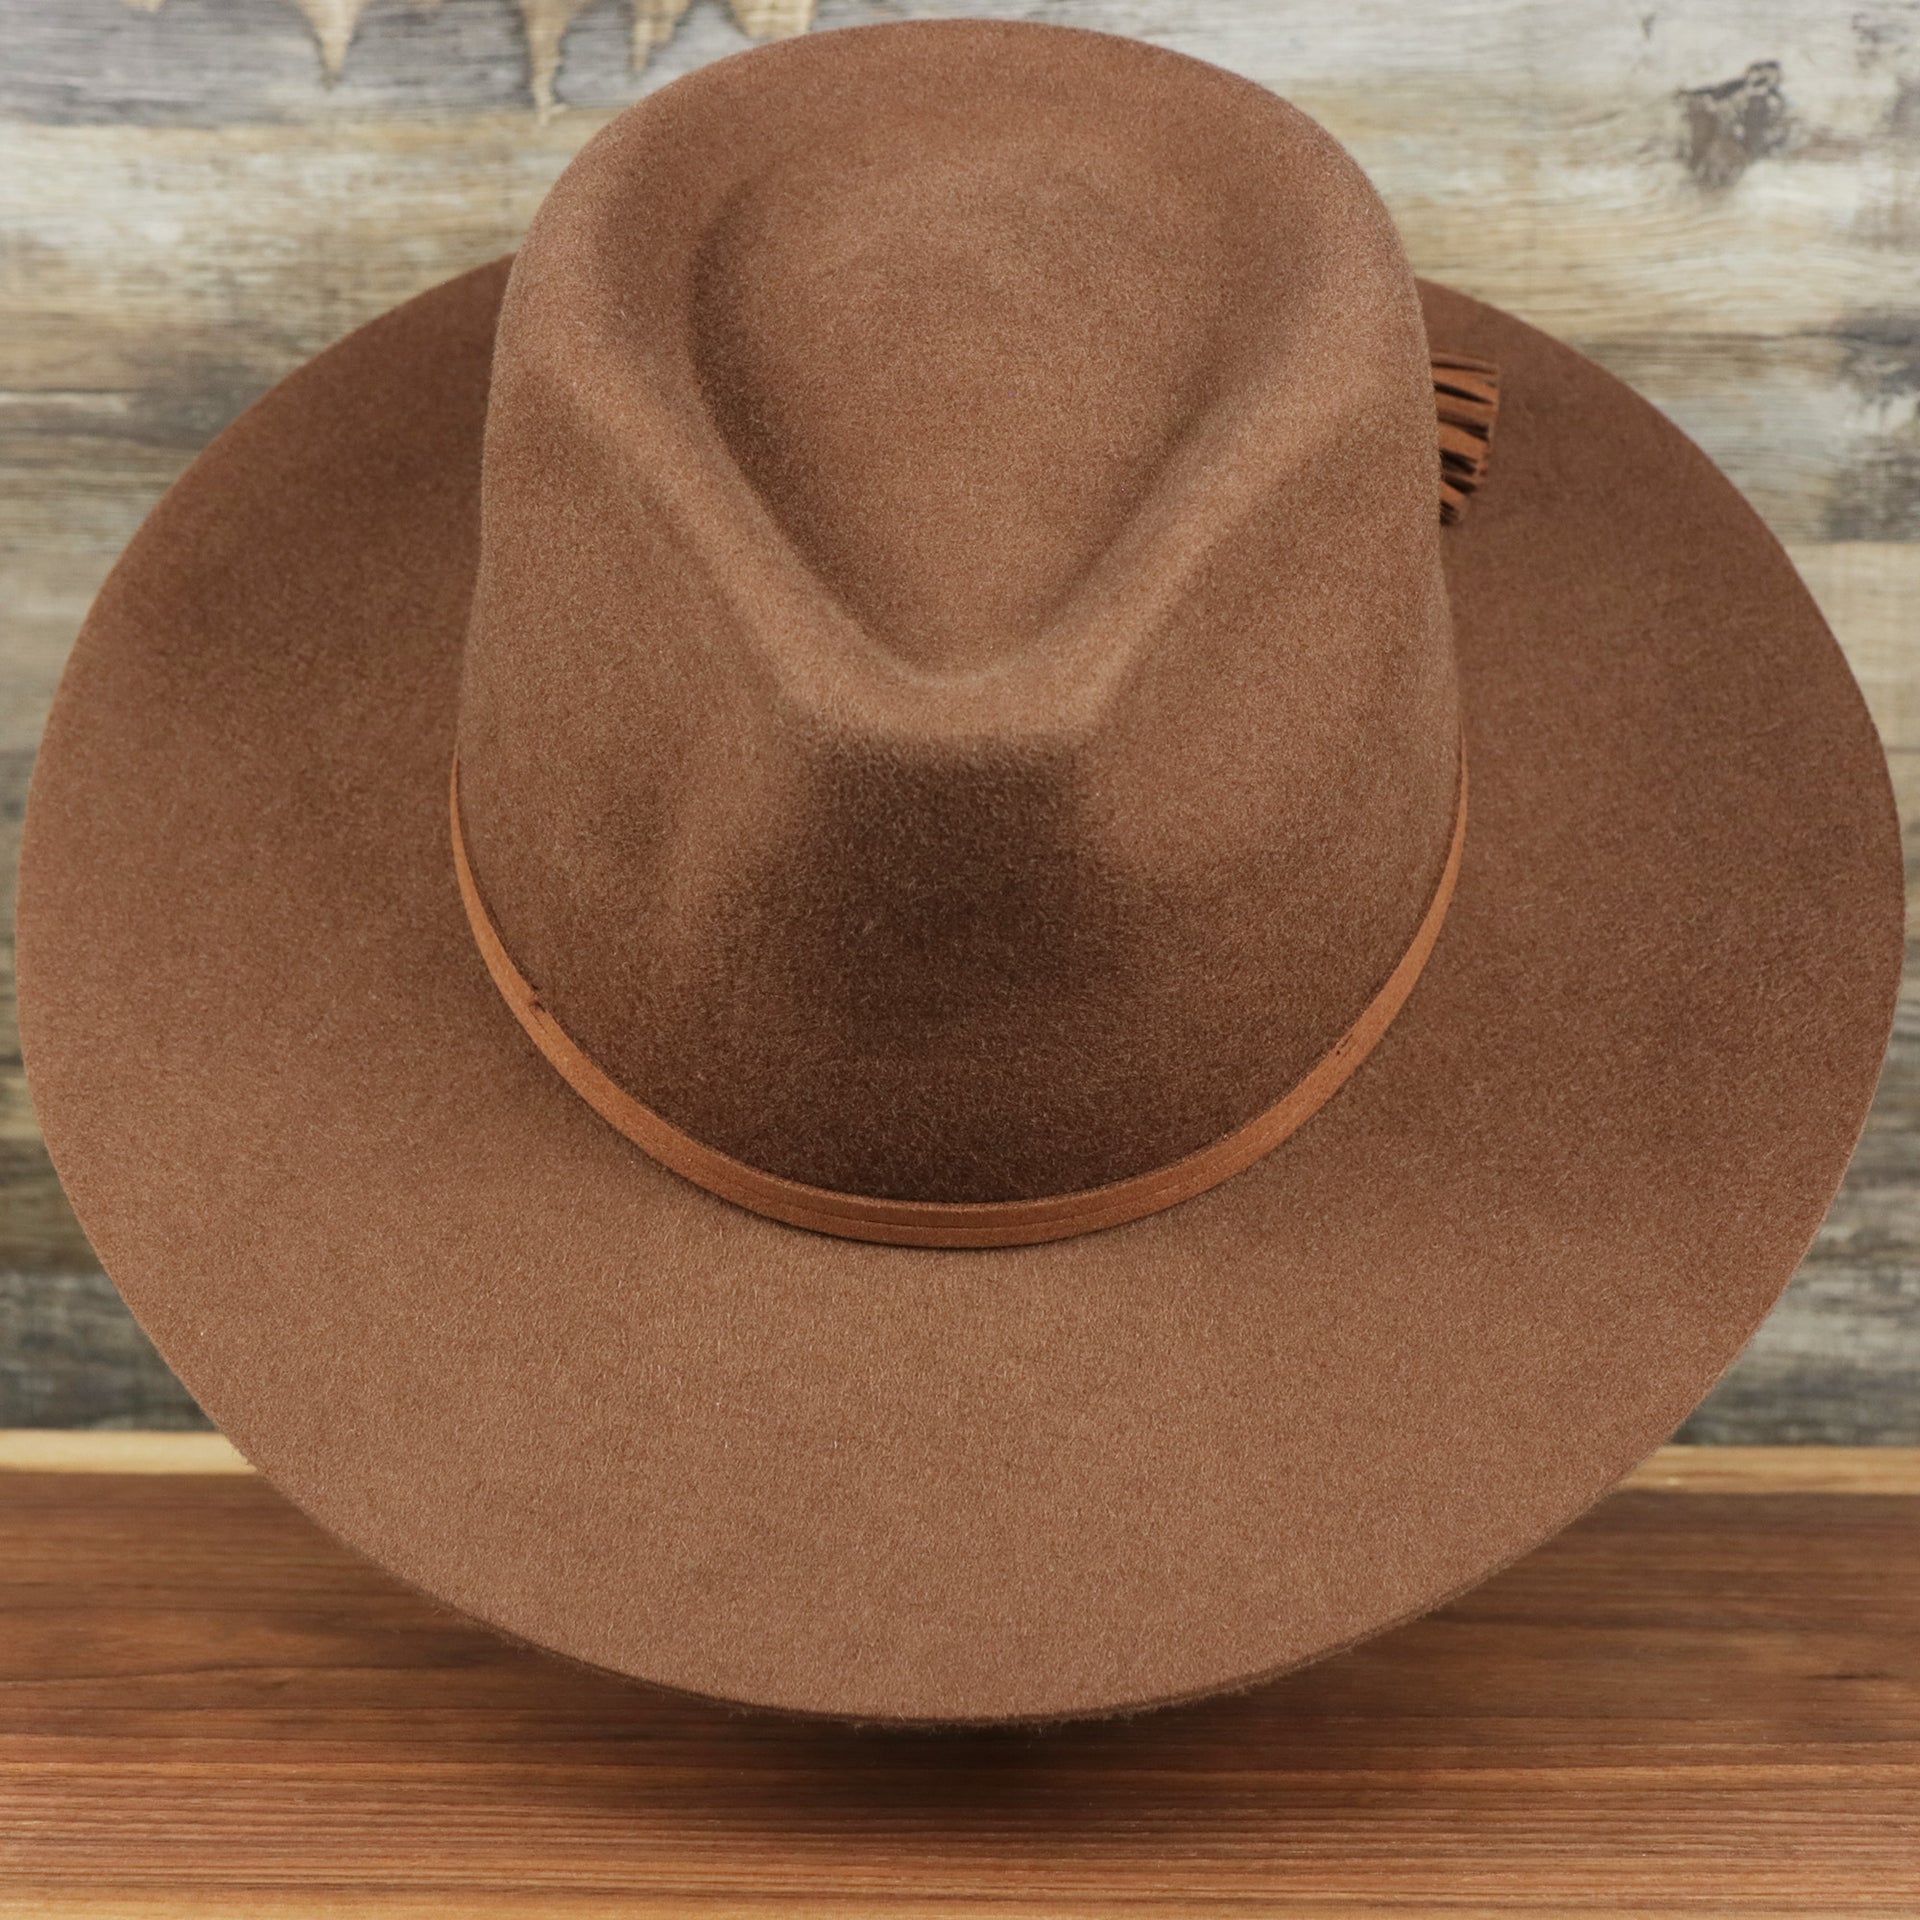 The Wide Brim Ribbon Edge Brown Fedora Hat with Black Silk Interior | Zertrue 100% Australian Wool